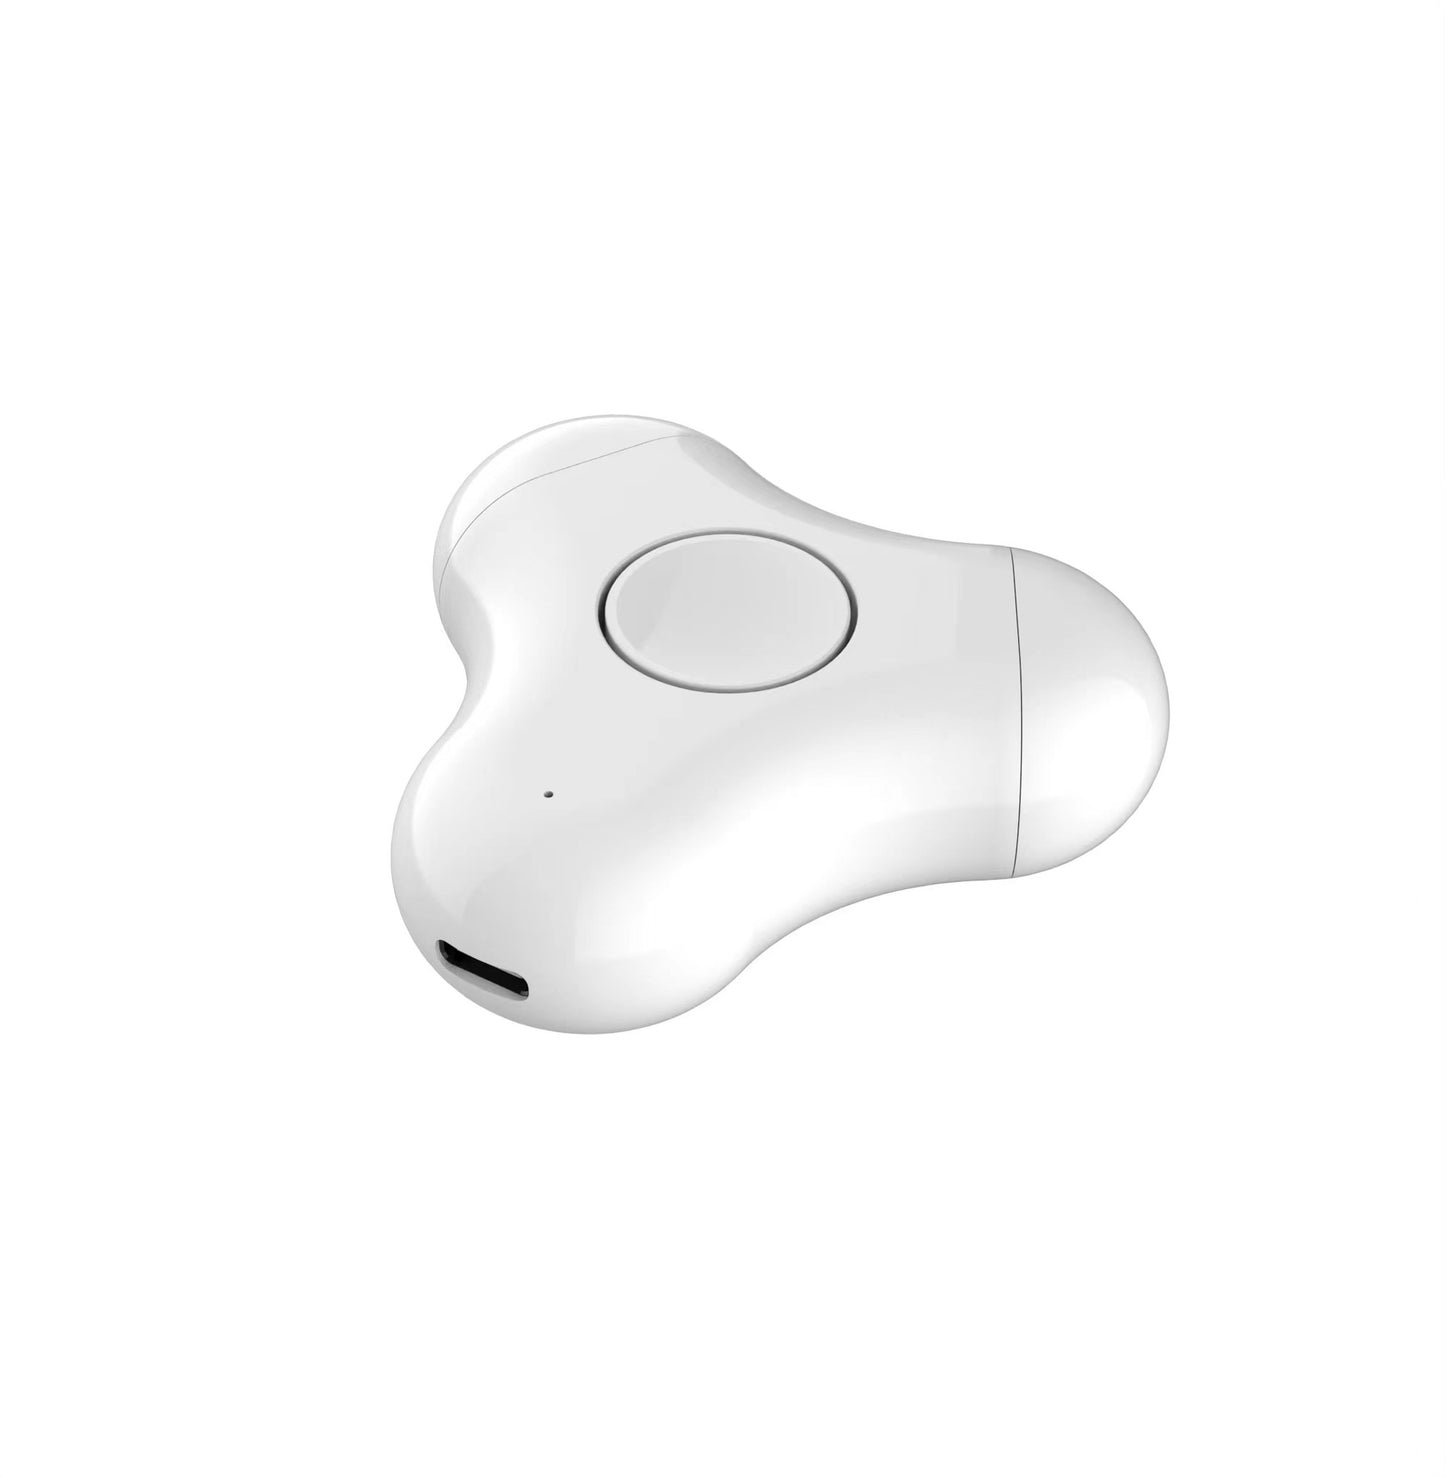 Oreillette Bluetooth gyroscopique, Ecouteur Bluetooth 2 en 1